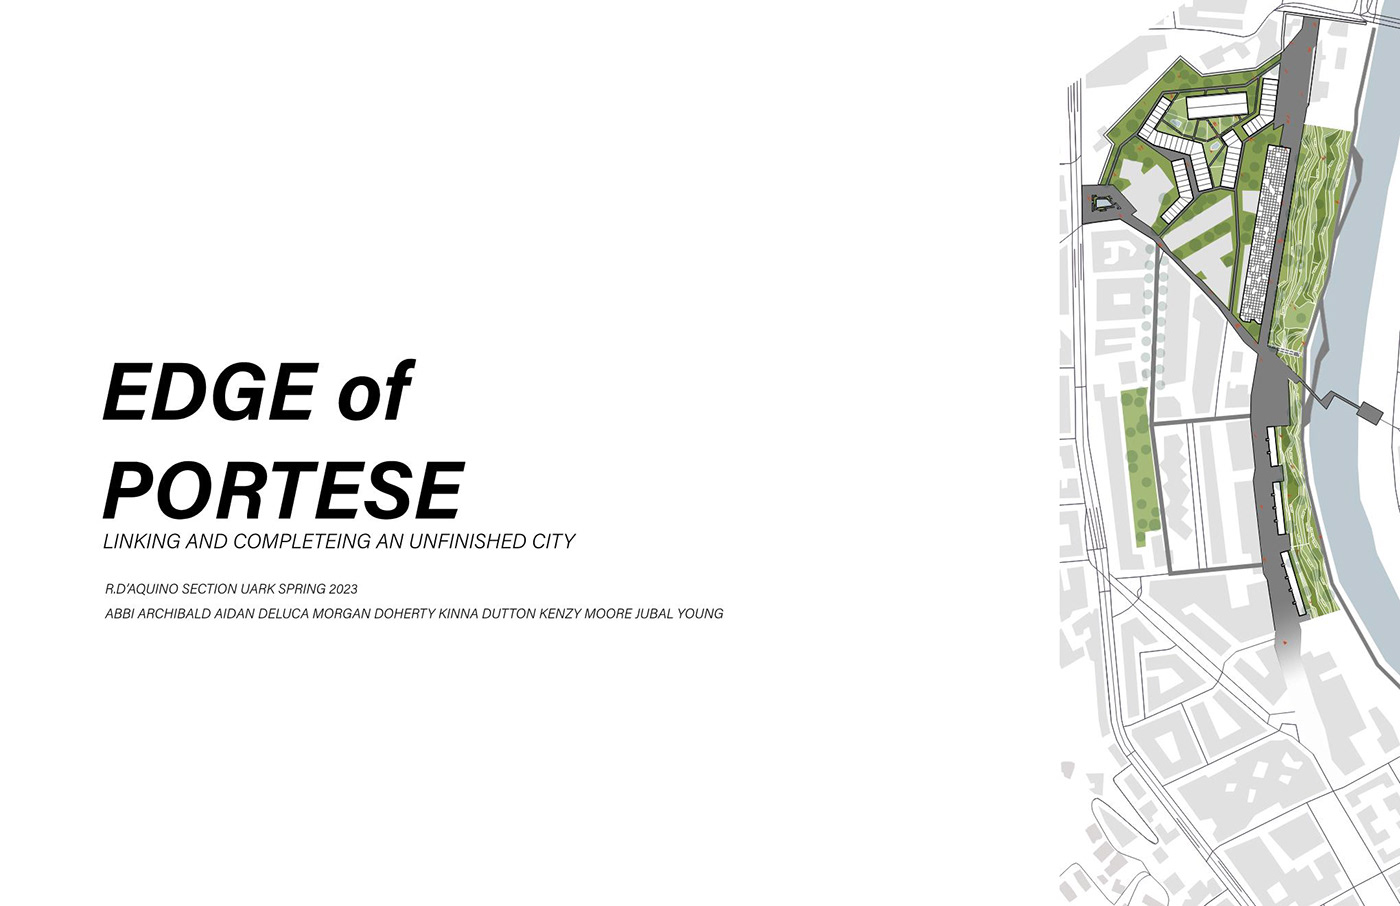 Italy gentrification preservation Urban Design TEAMWORK 15 Minute CIty city planning palimpsest roma